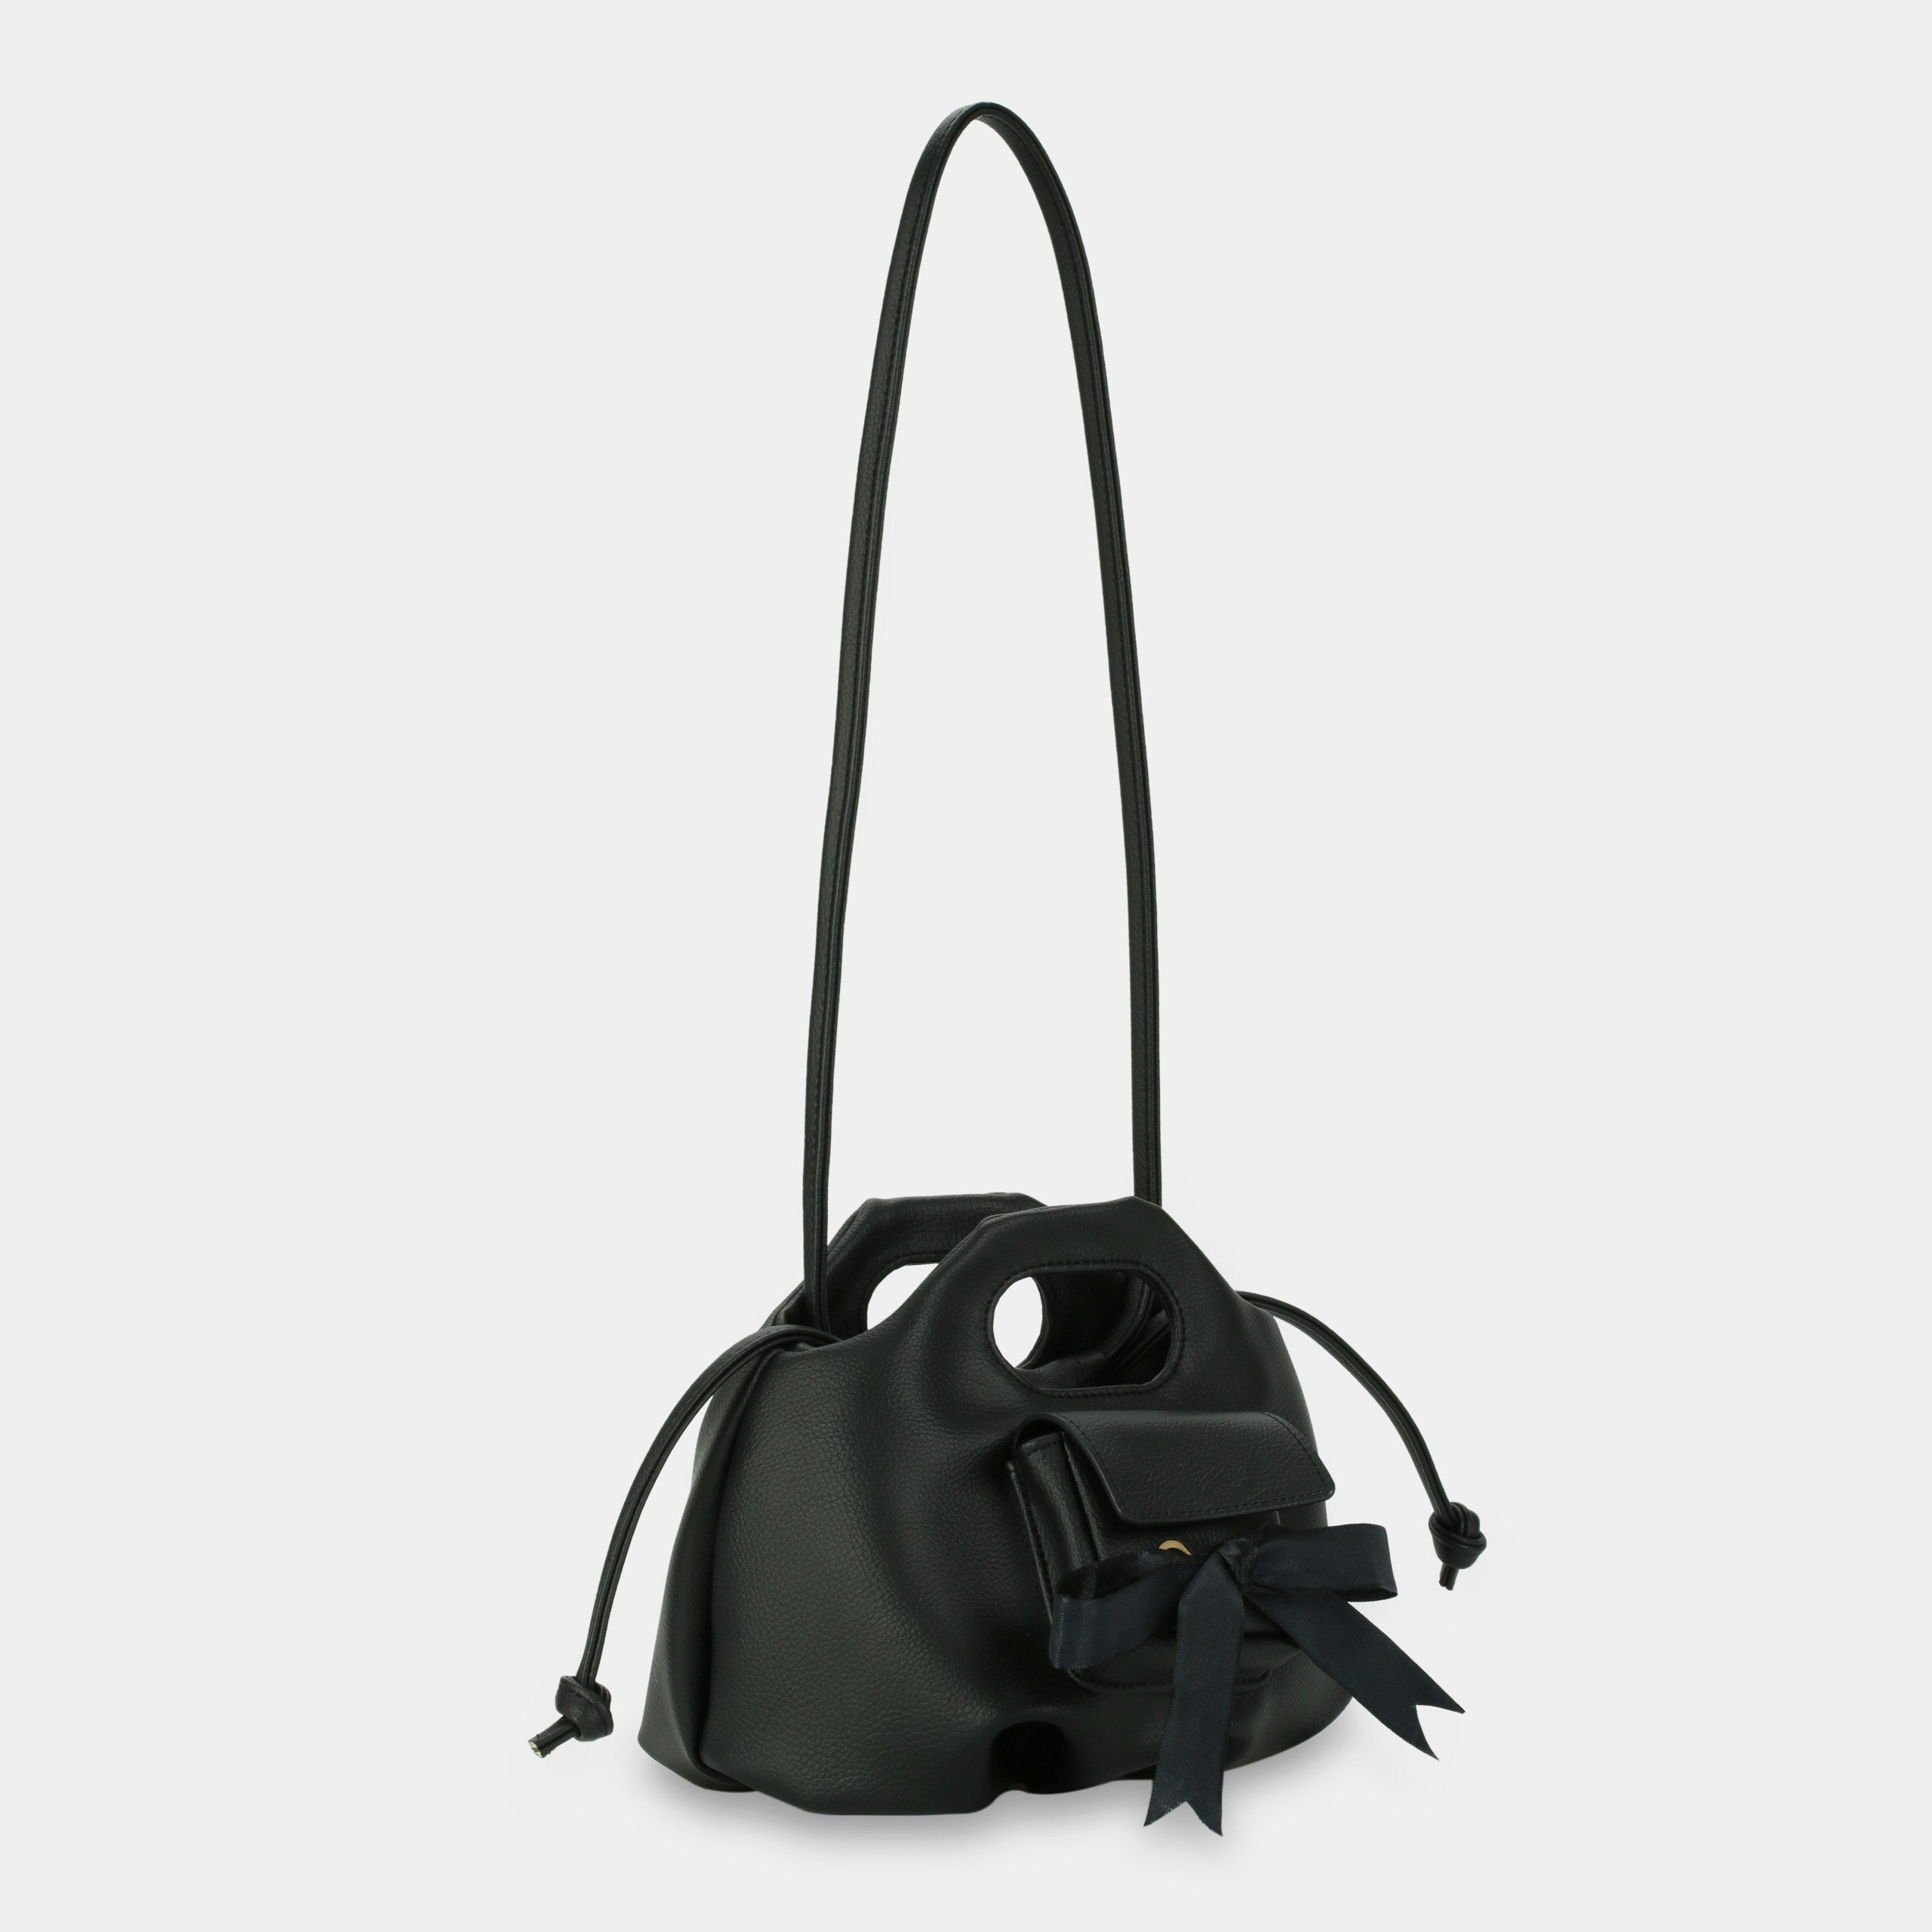 Flower Mini Pocket & Bow handbag in black